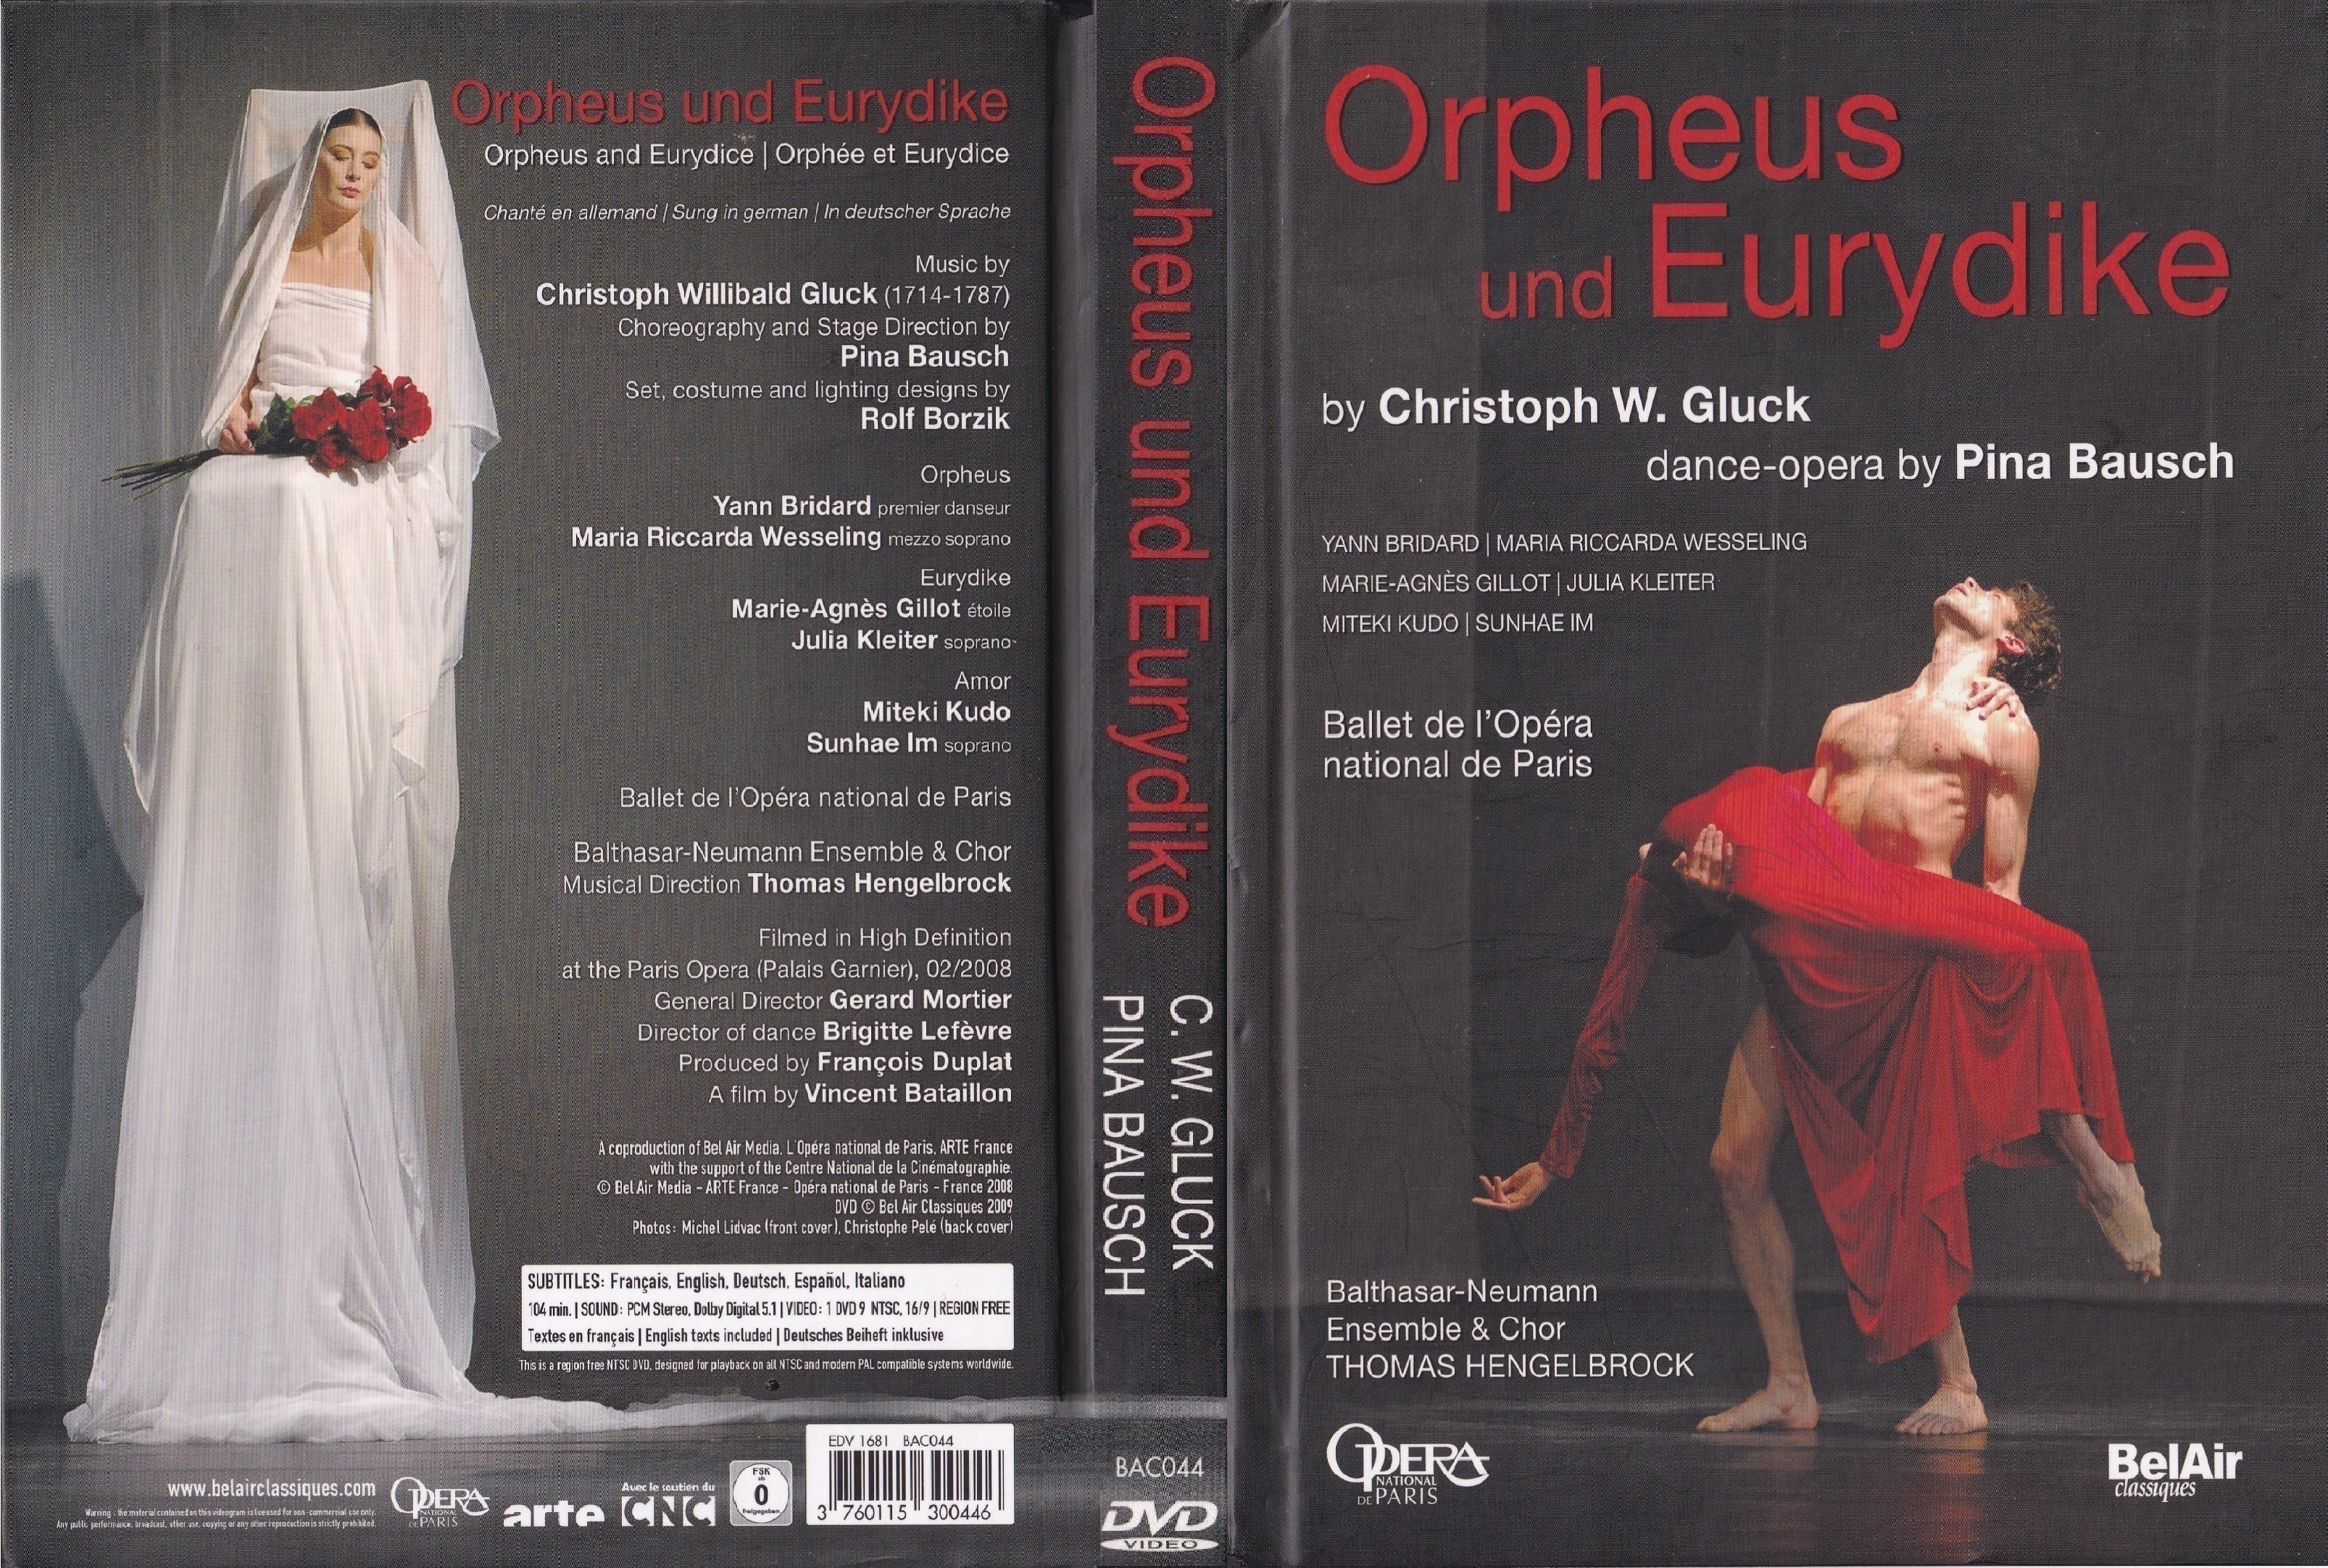 Jaquette DVD Orpheus und Eurydike